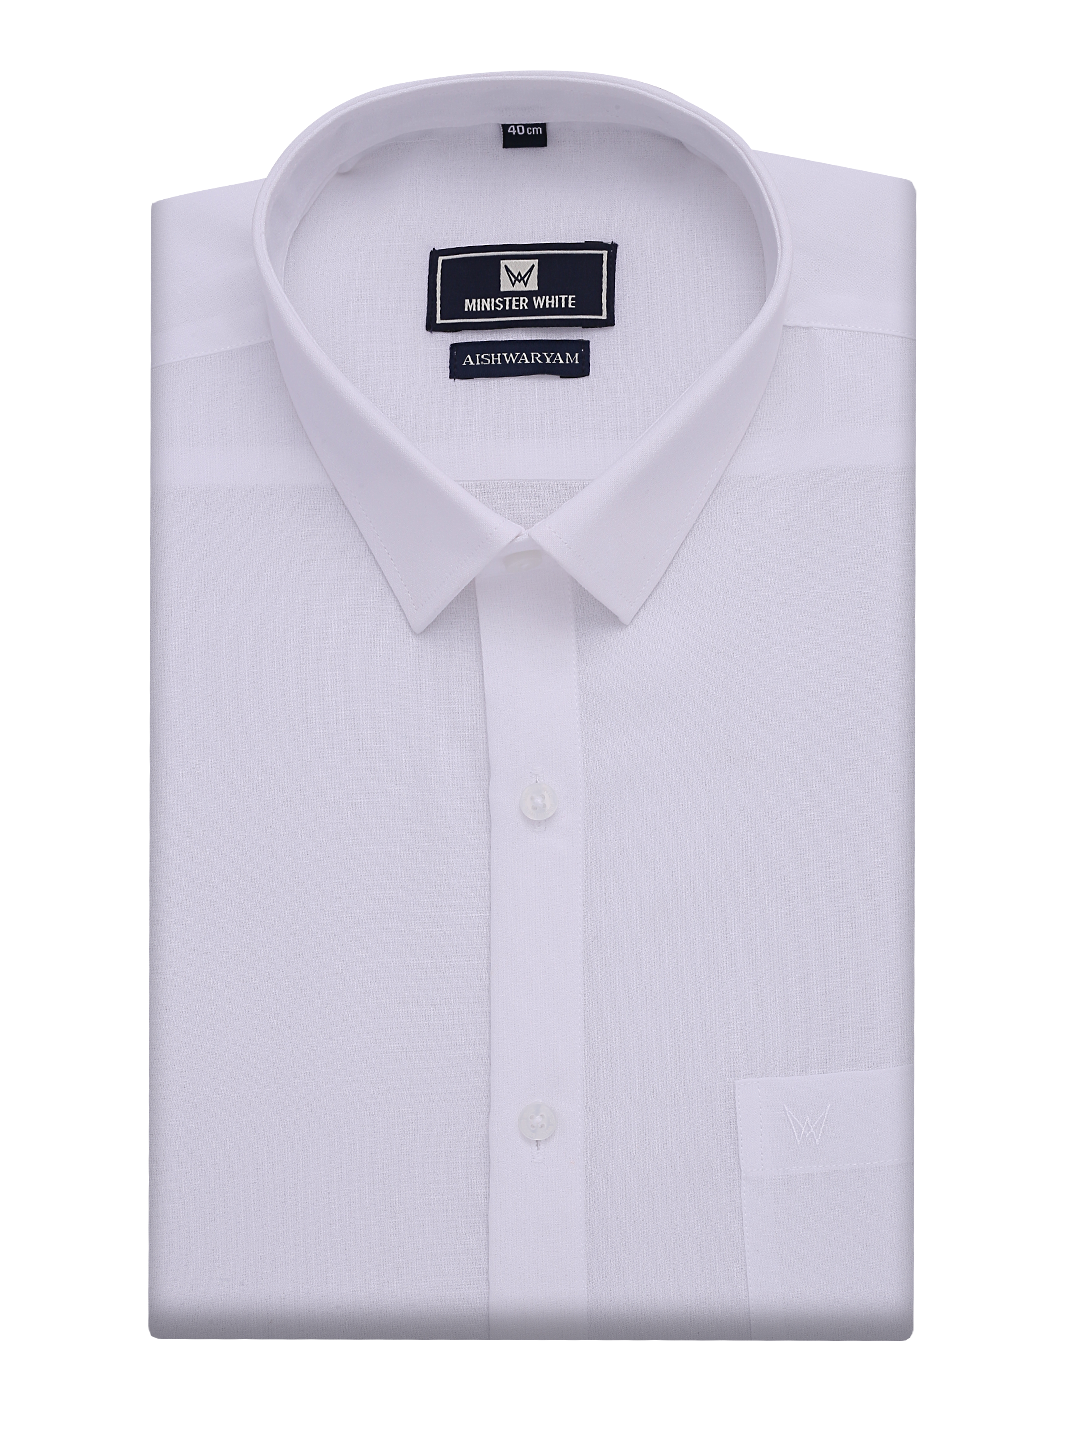 Aishwaryam White Shirt.Regular Fit. Liberty Cut